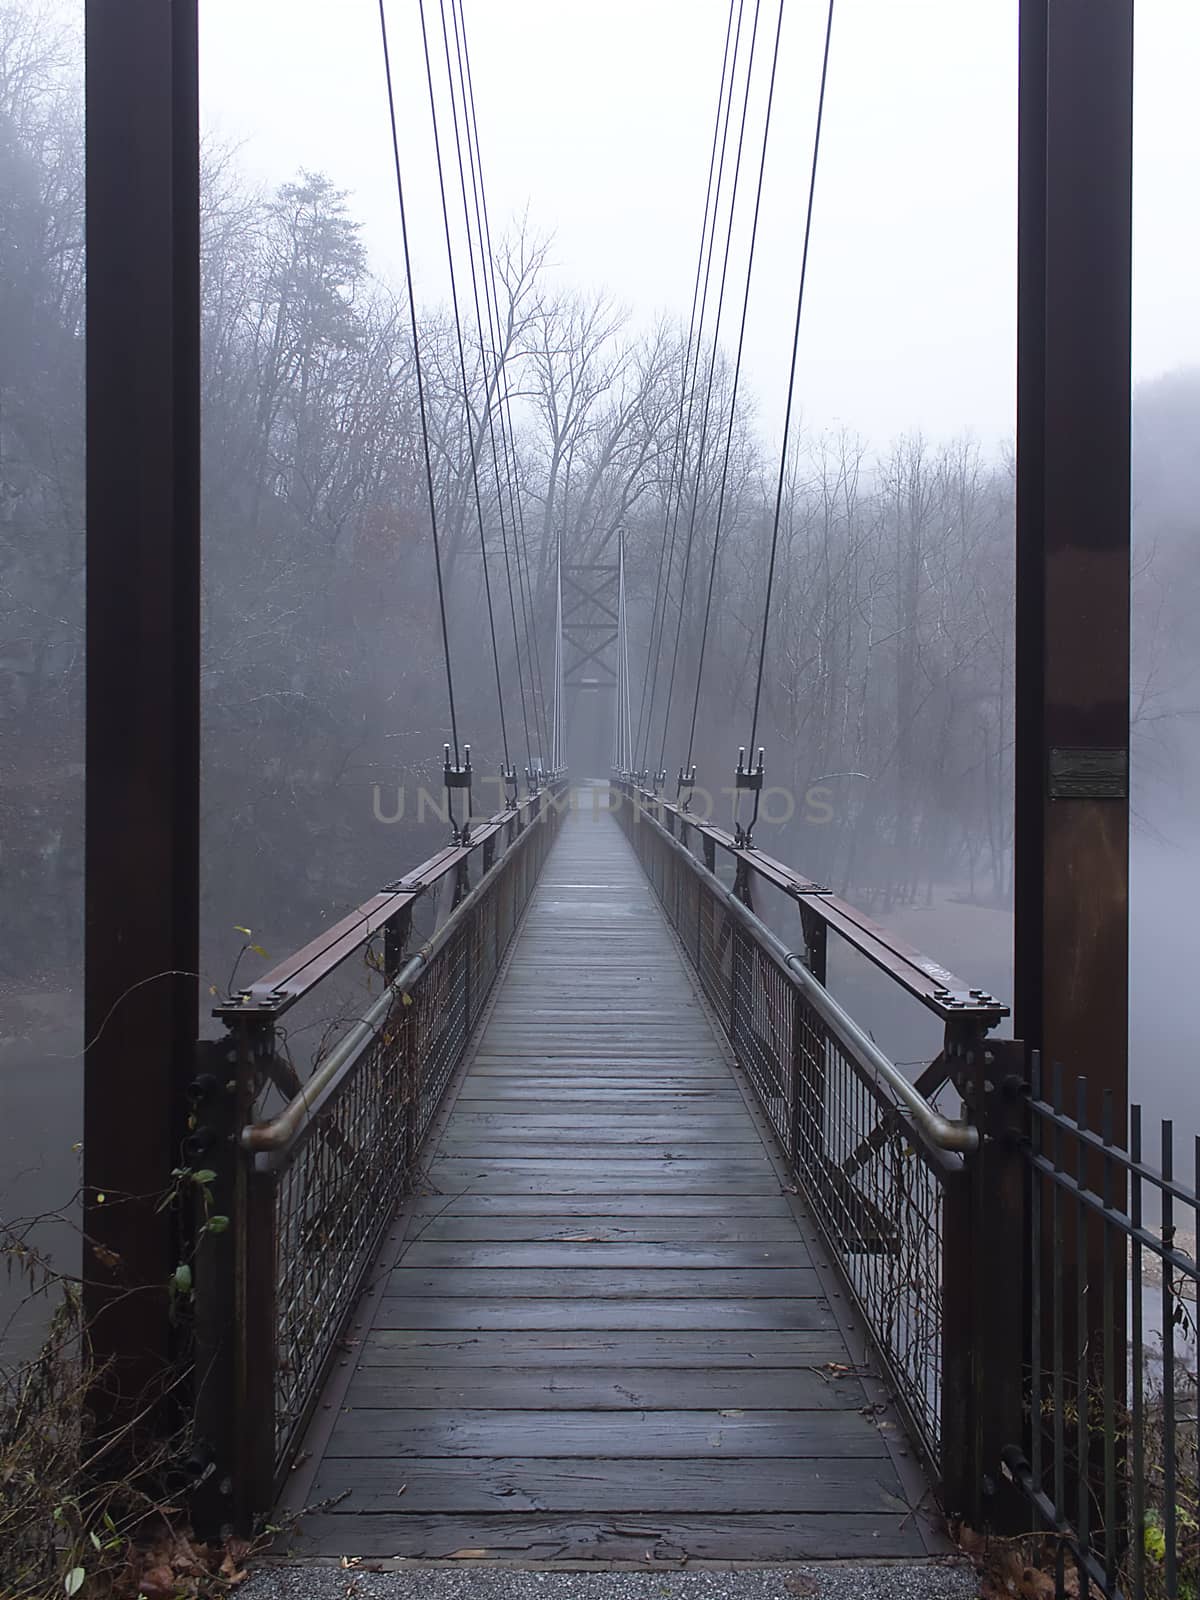 Pedestrian suspension bridge over river with fog